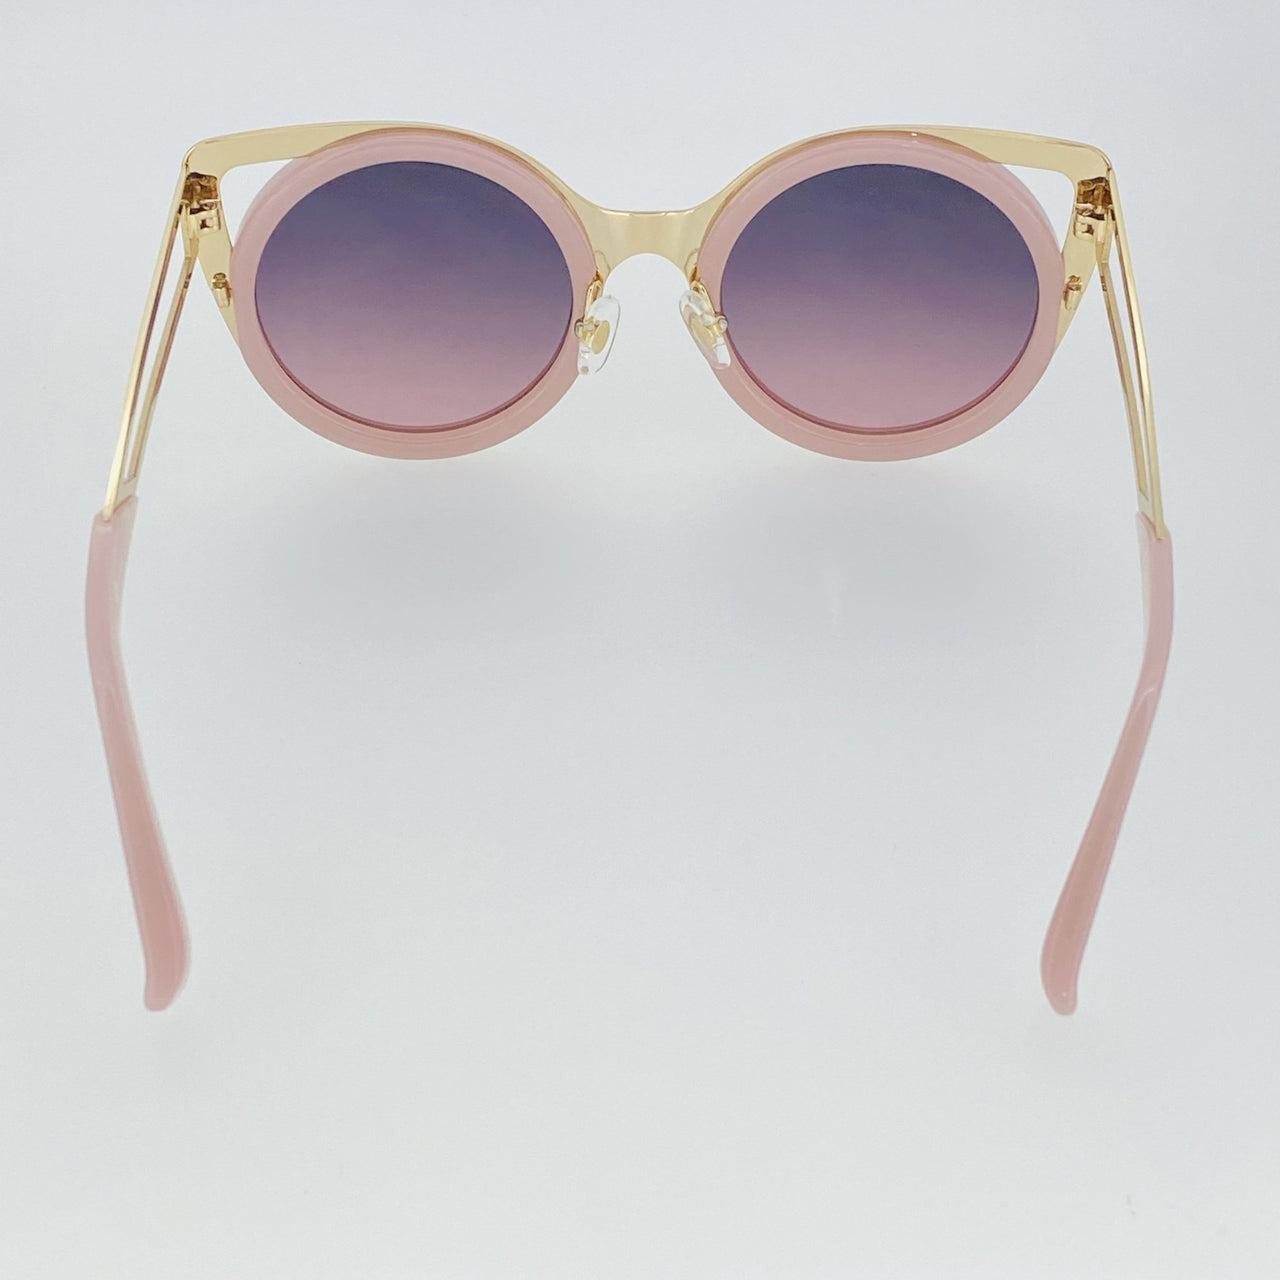 Erdem Women Sunglasses Cat Eye Light Pink Light Gold with Grey/Pink Graduated Lenses EDM4C3SUN - Watches & Crystals